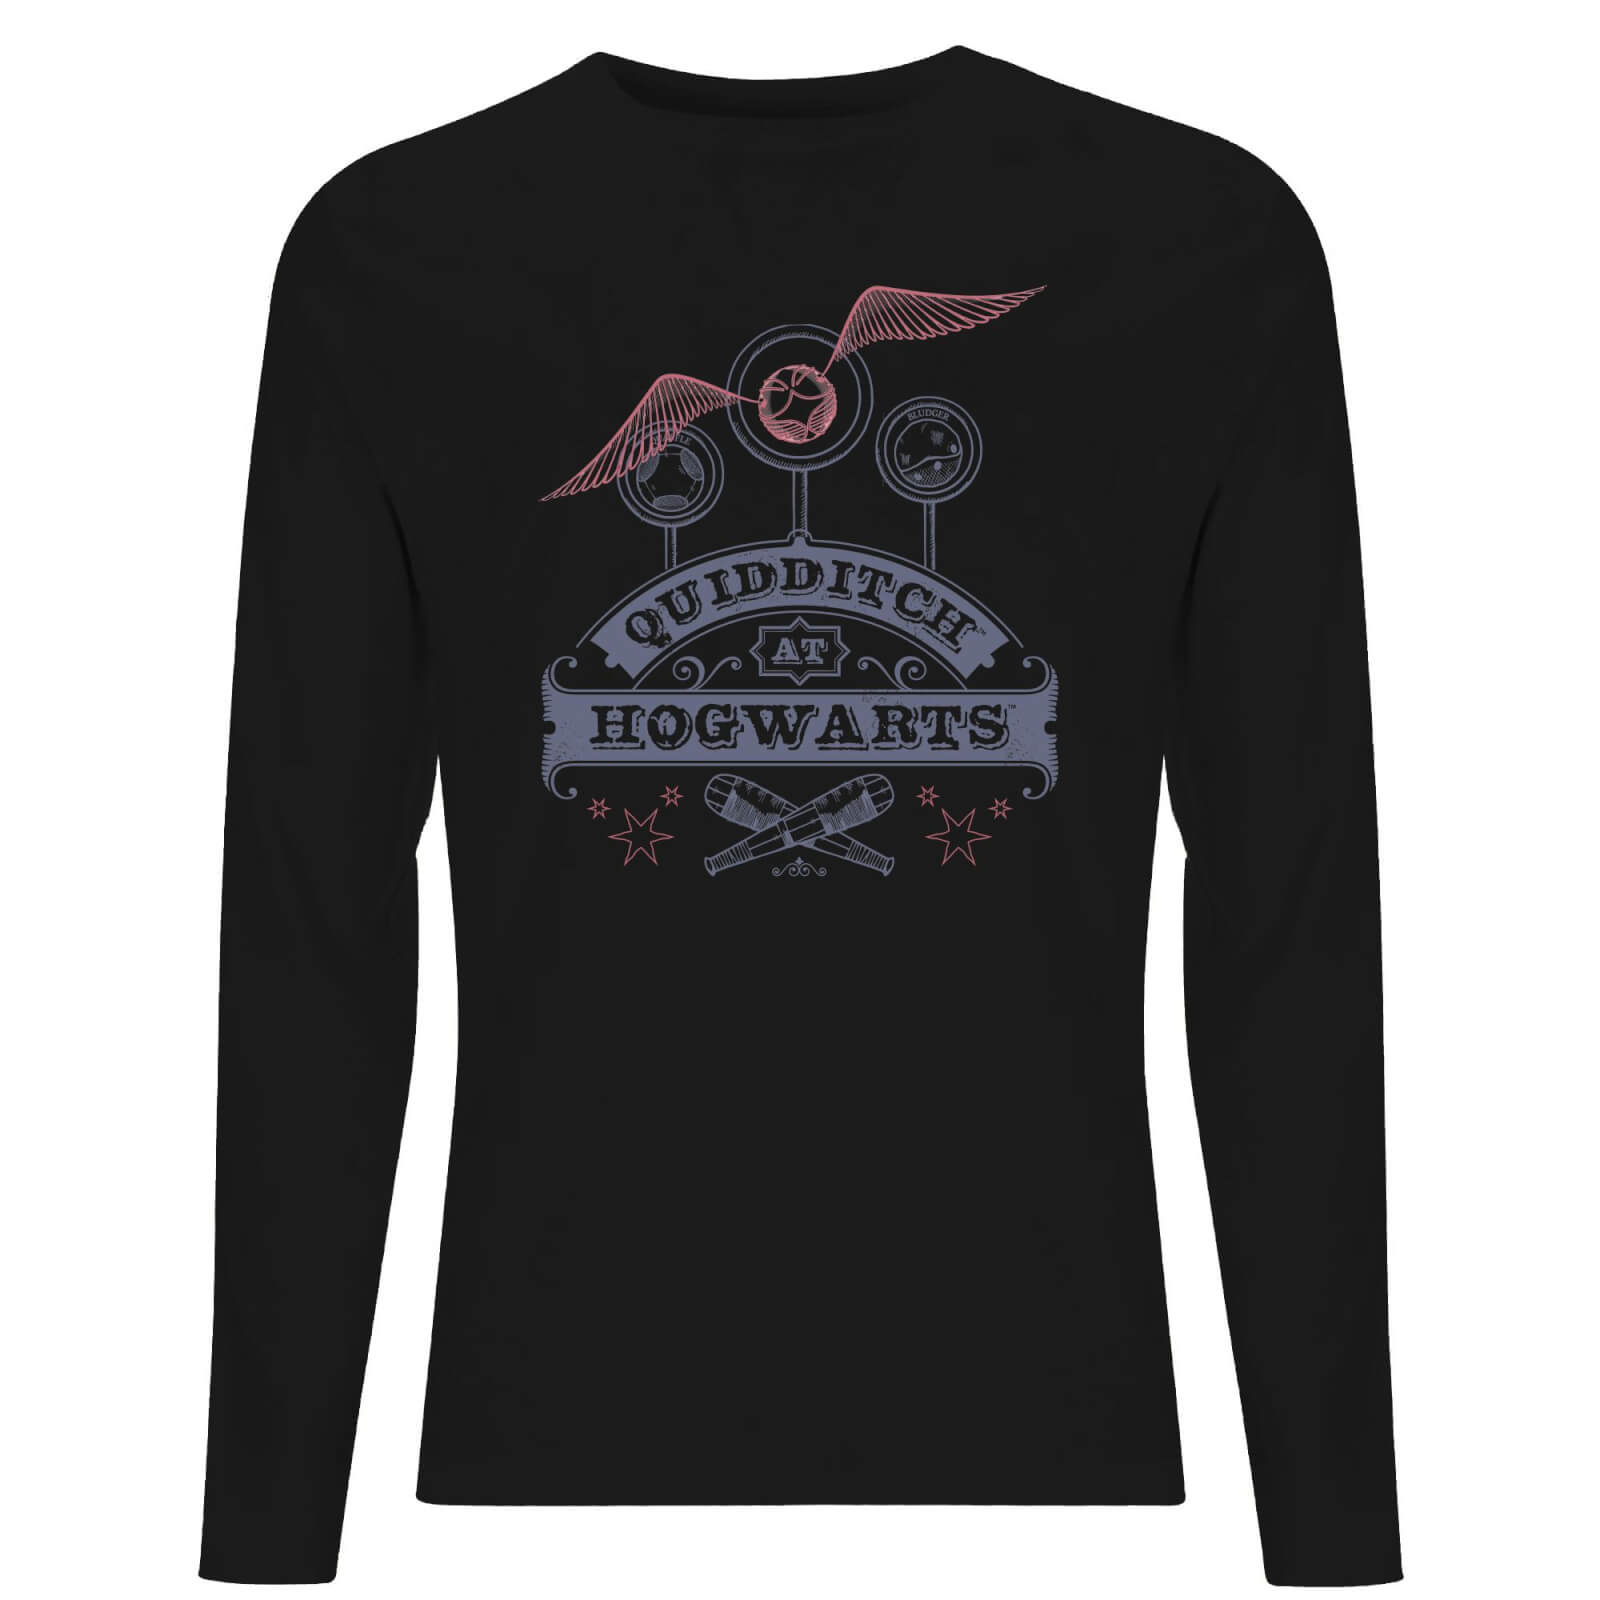 Harry Potter Quidditch At Hogwarts Men's Long Sleeve T-Shirt - Black - XXL - Black